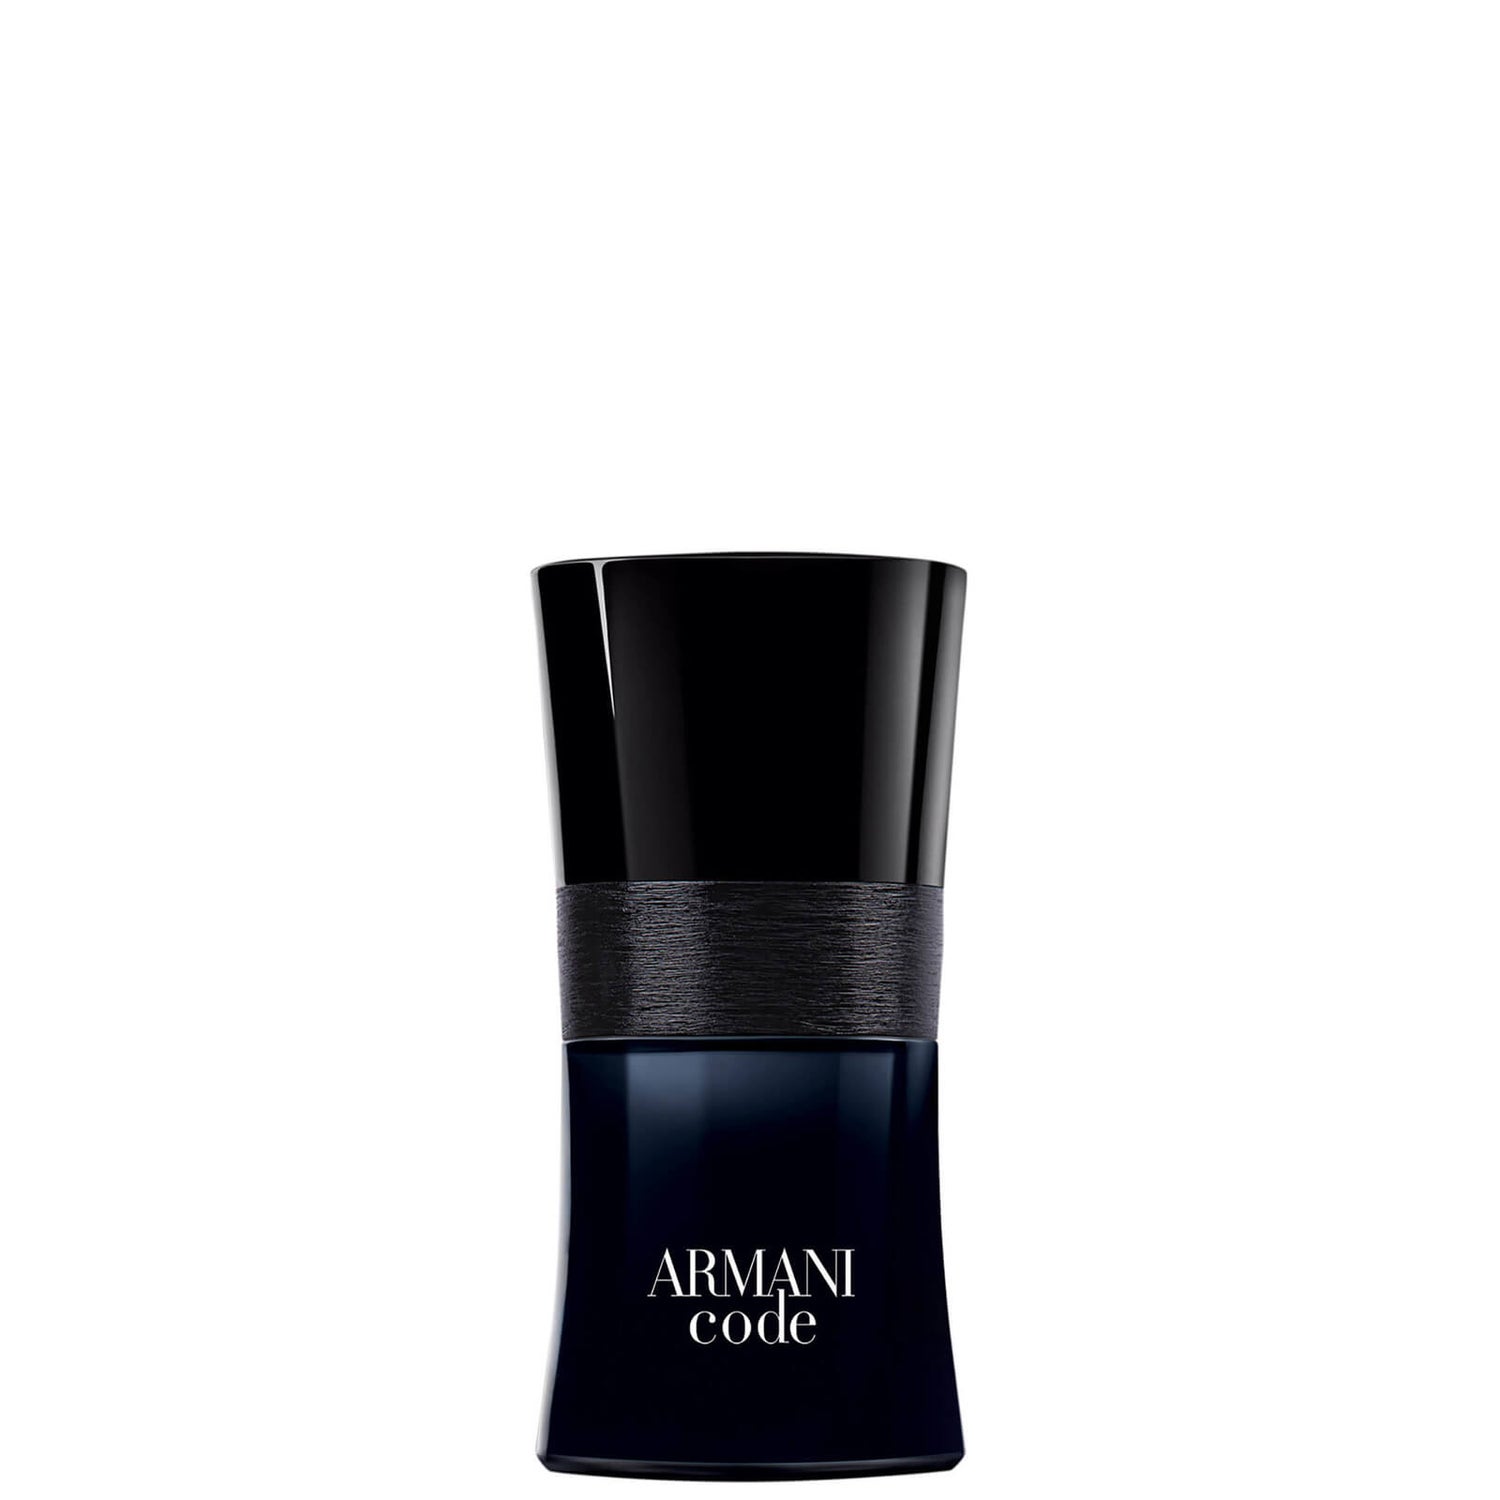 Armani Code Eau de Toilette - 30ml